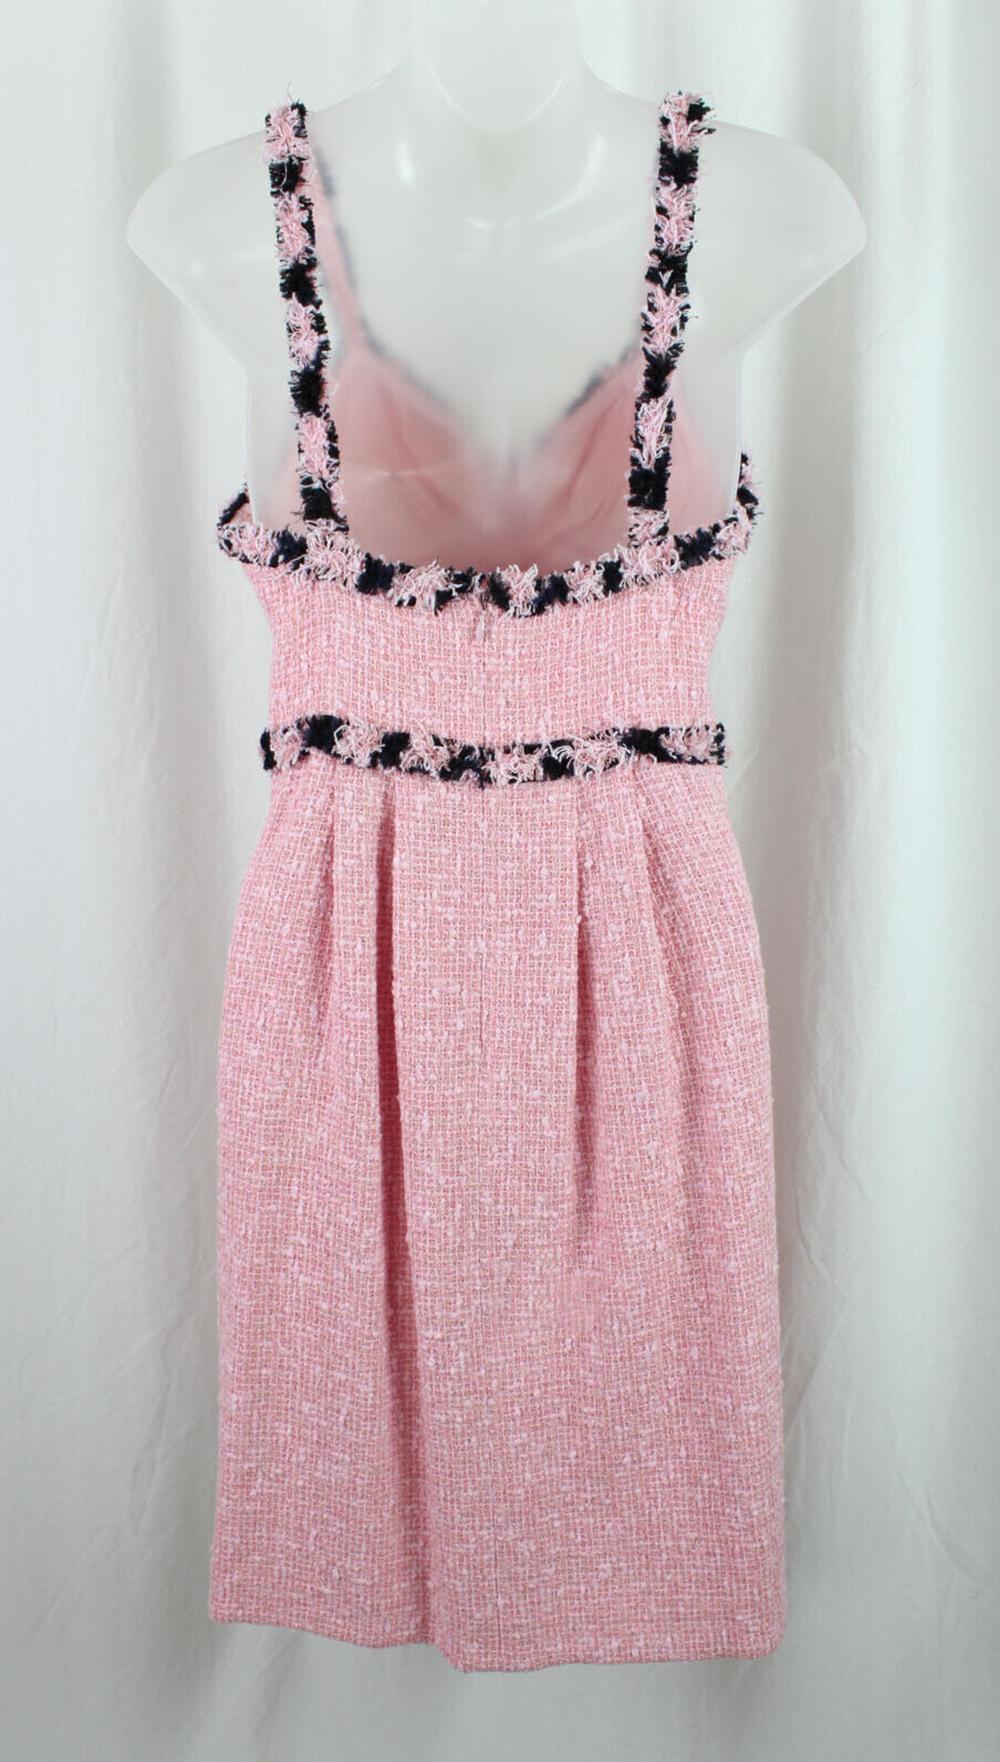 Chanel Eva Longoria Style Famous Pastel Pink Tweed Dress For Sale 6